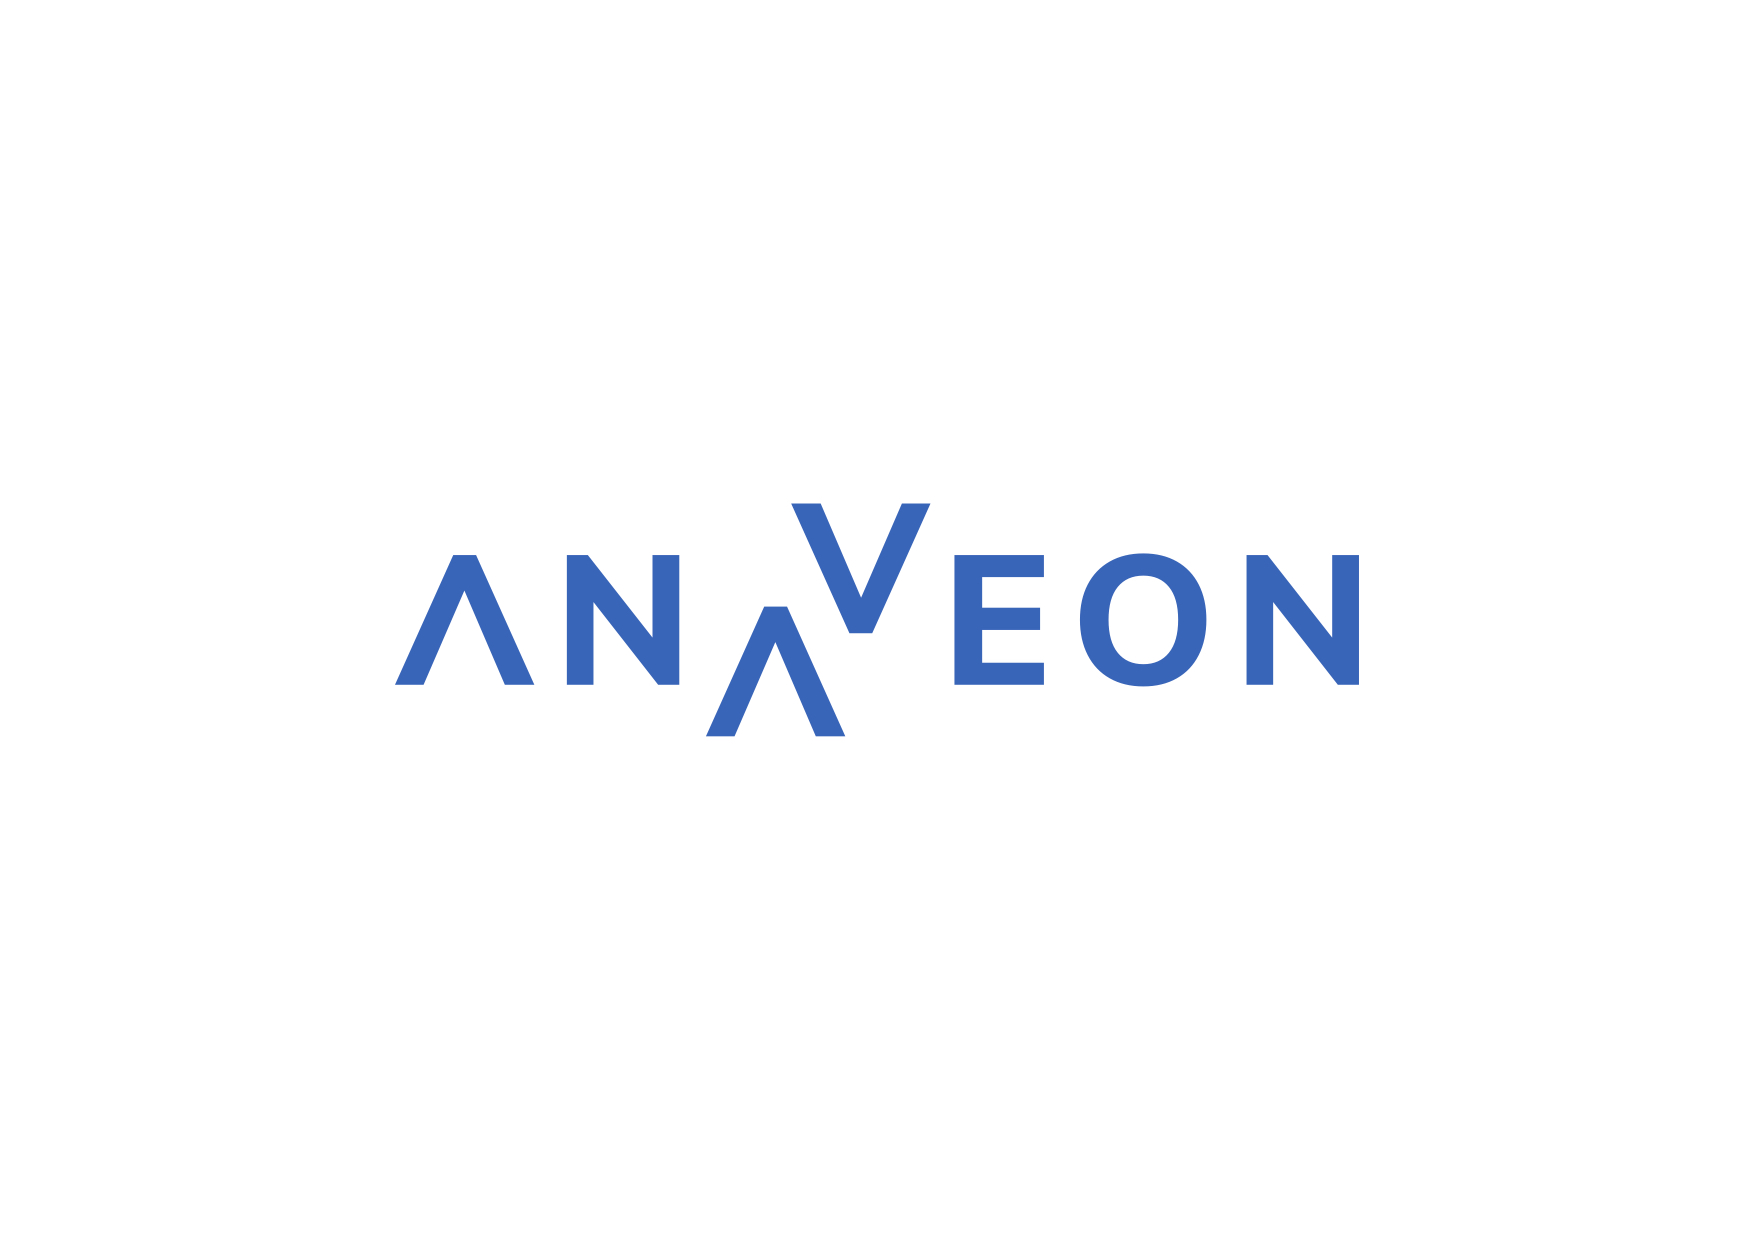 Anaveon Logo